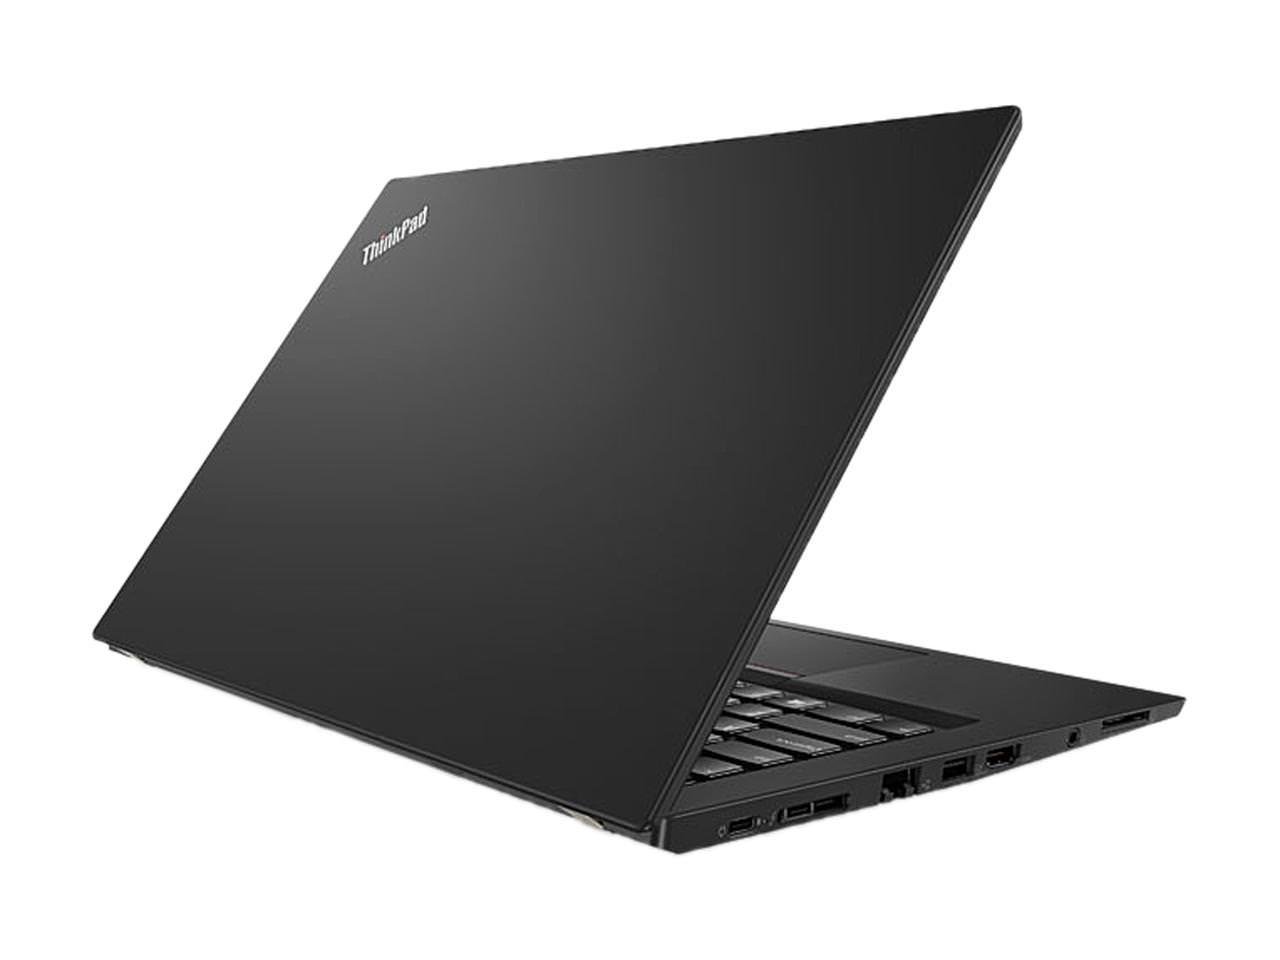 Lenovo ThinkPad T480s Windows 10 Pro Laptop - i7-8650U, 16GB RAM, 512GB PCIe NVMe SSD, 14" IPS FHD (1920x1080) Touch Display w/NVIDIA MX150 Graphics, Black